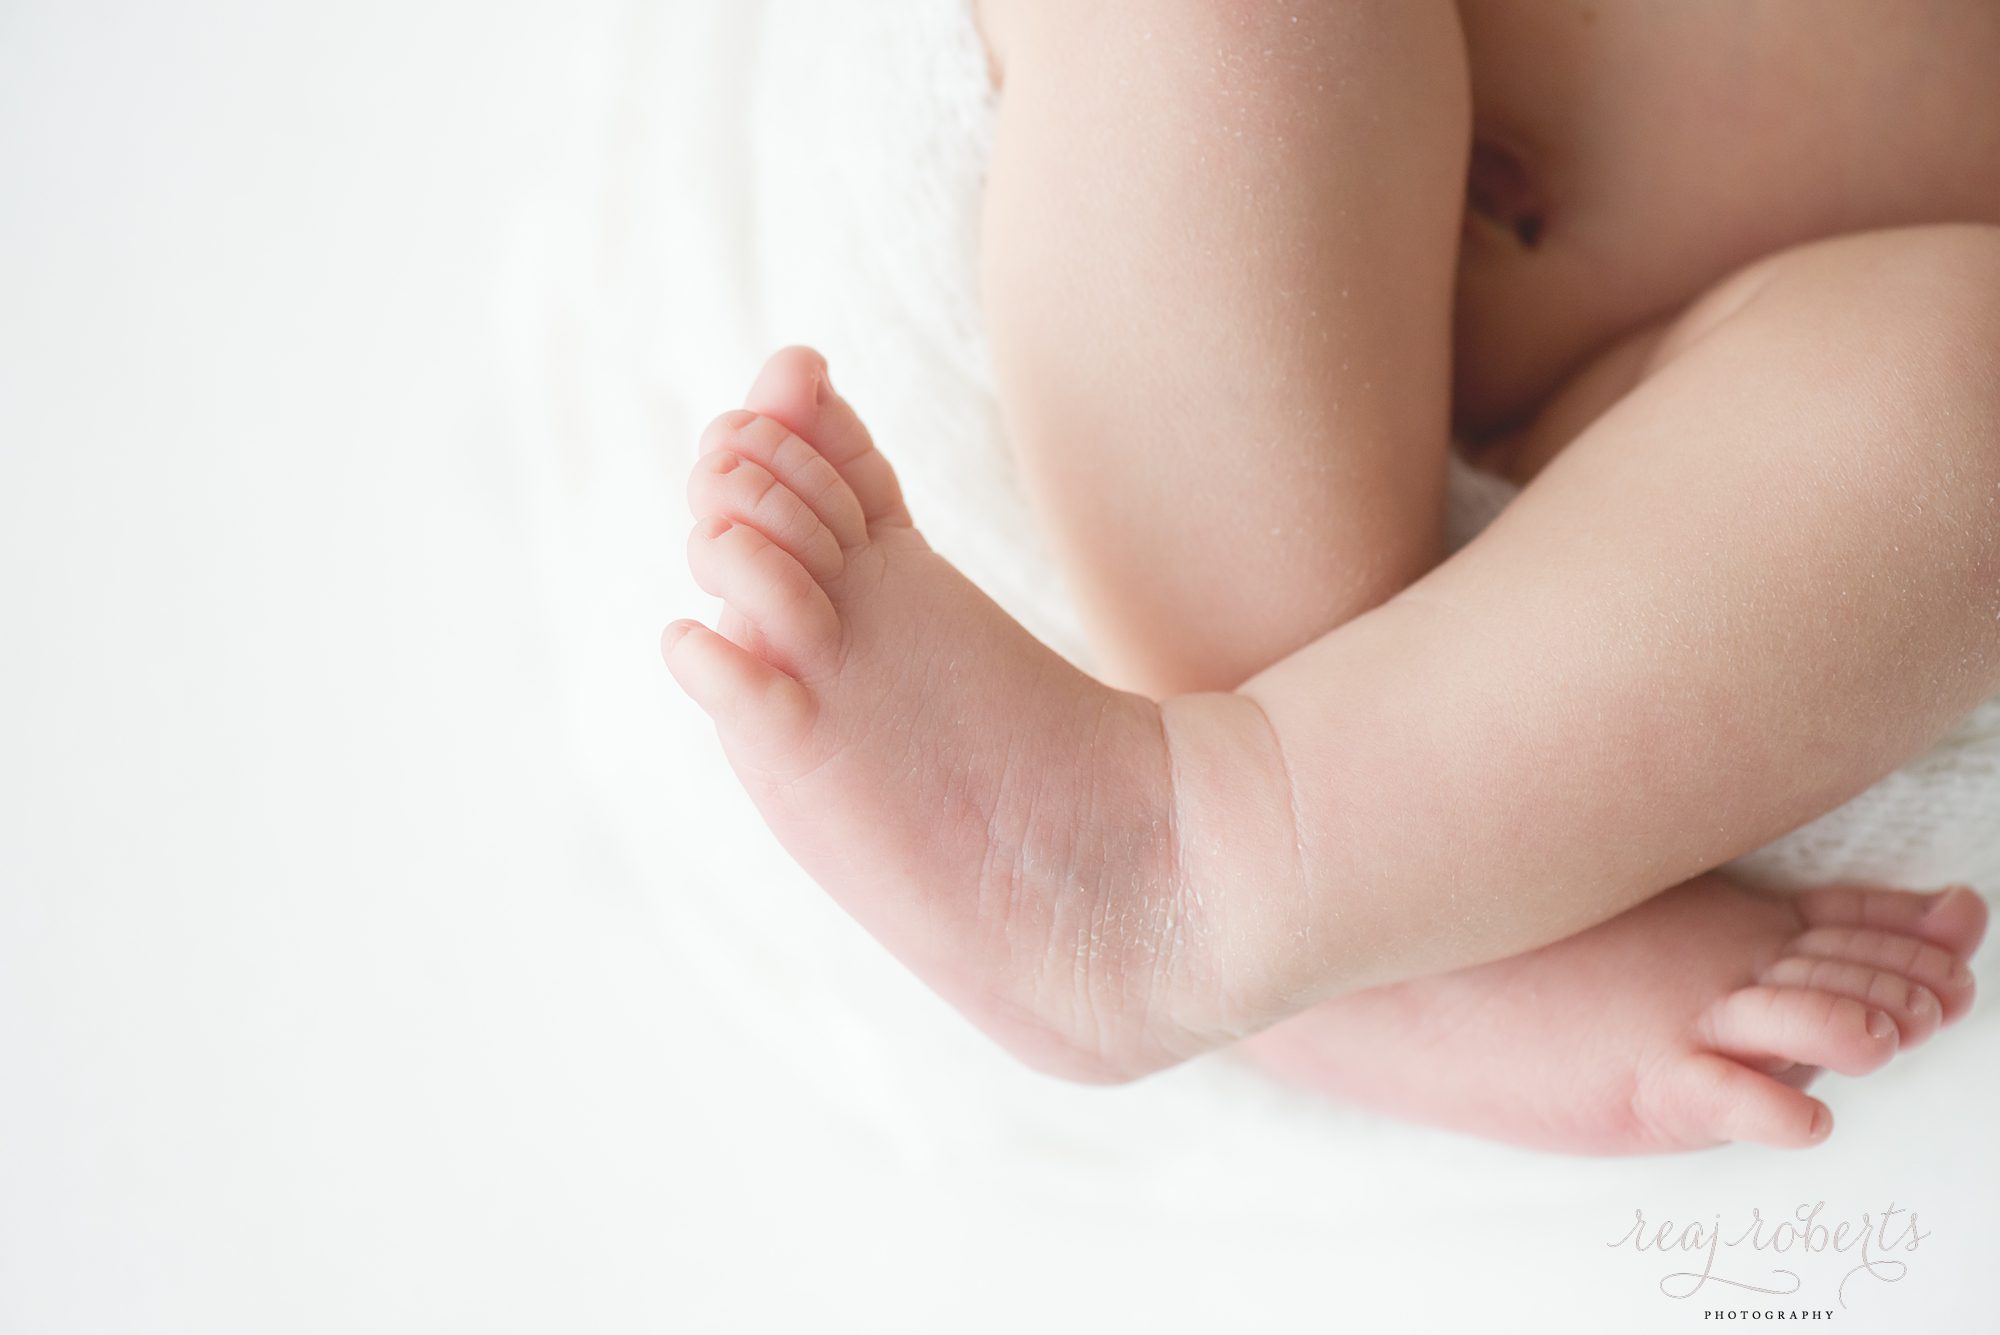 newborn baby feet | Reaj Roberts Photography